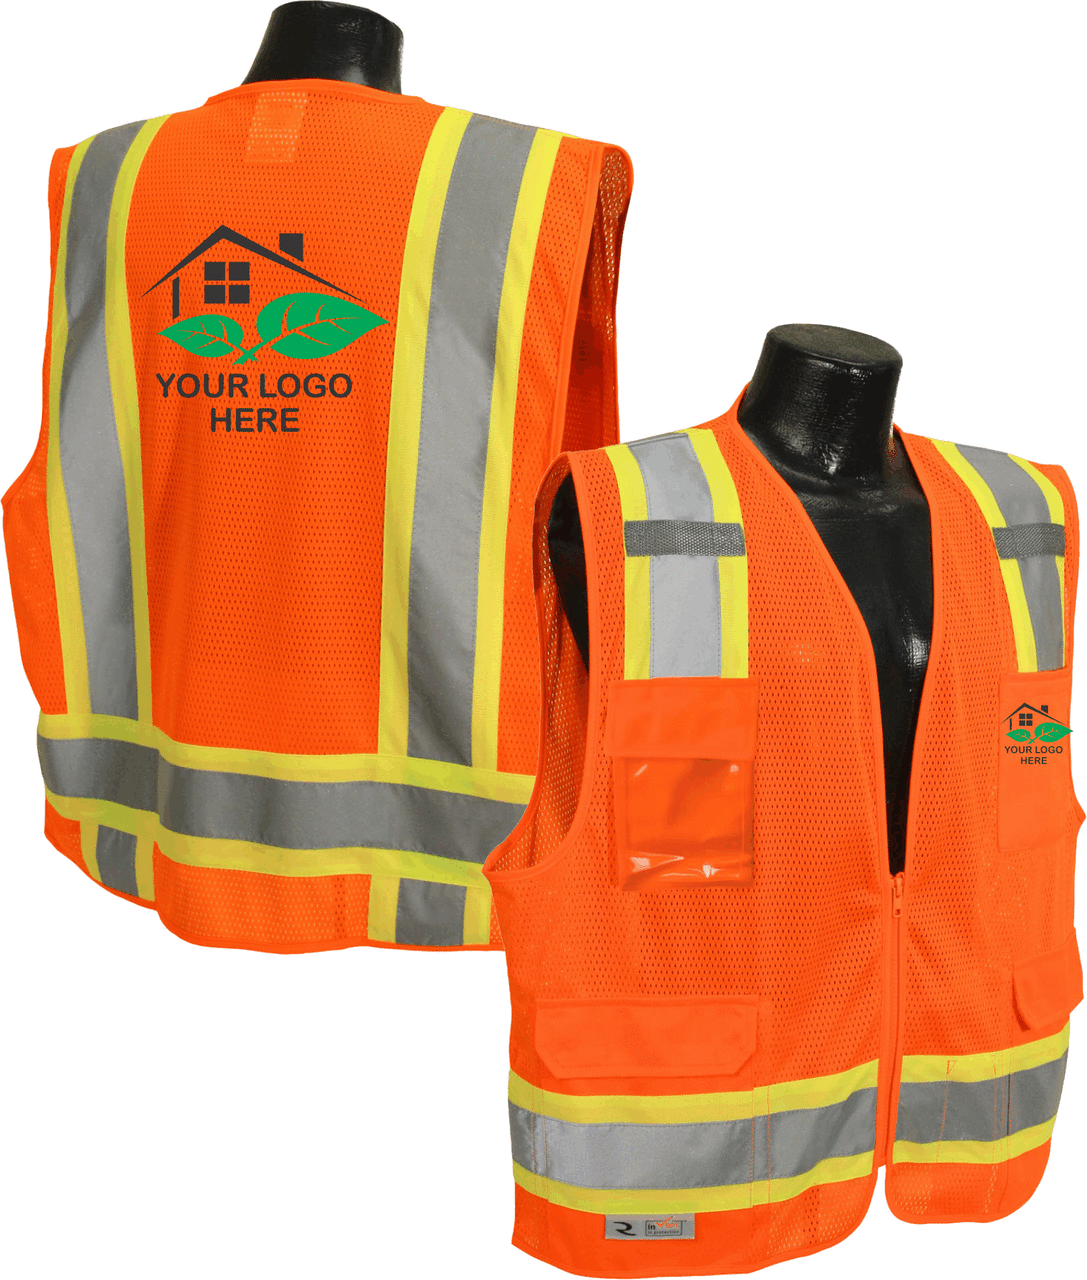 SV6 Surveyors Vest Safety Orange with Custom Printed Logo